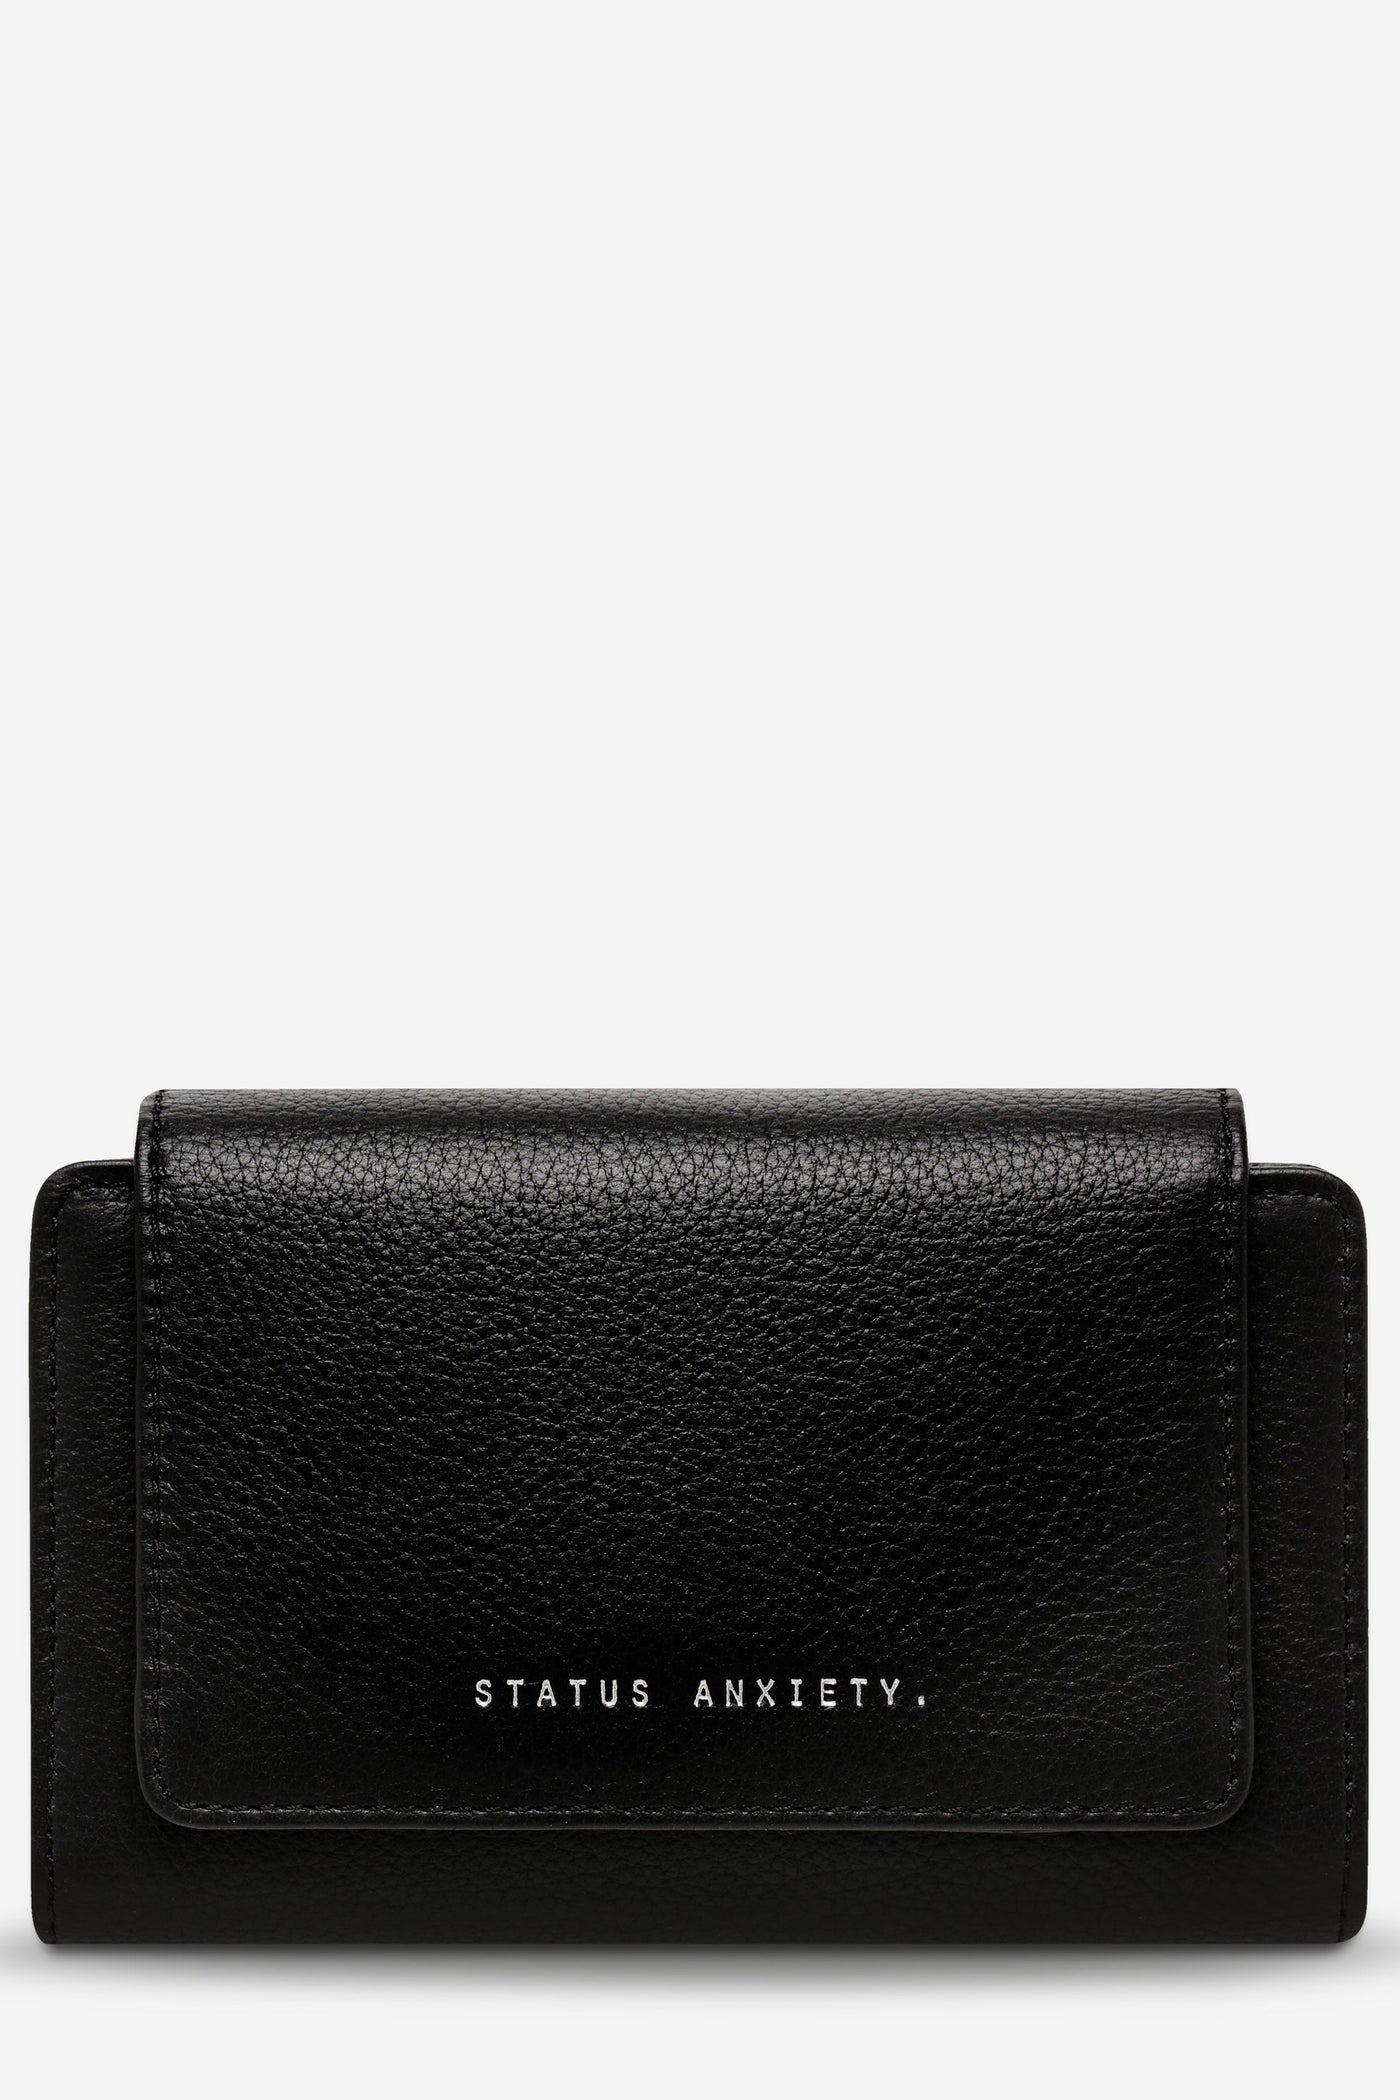 Status Anxiety Visions Wallet - Black